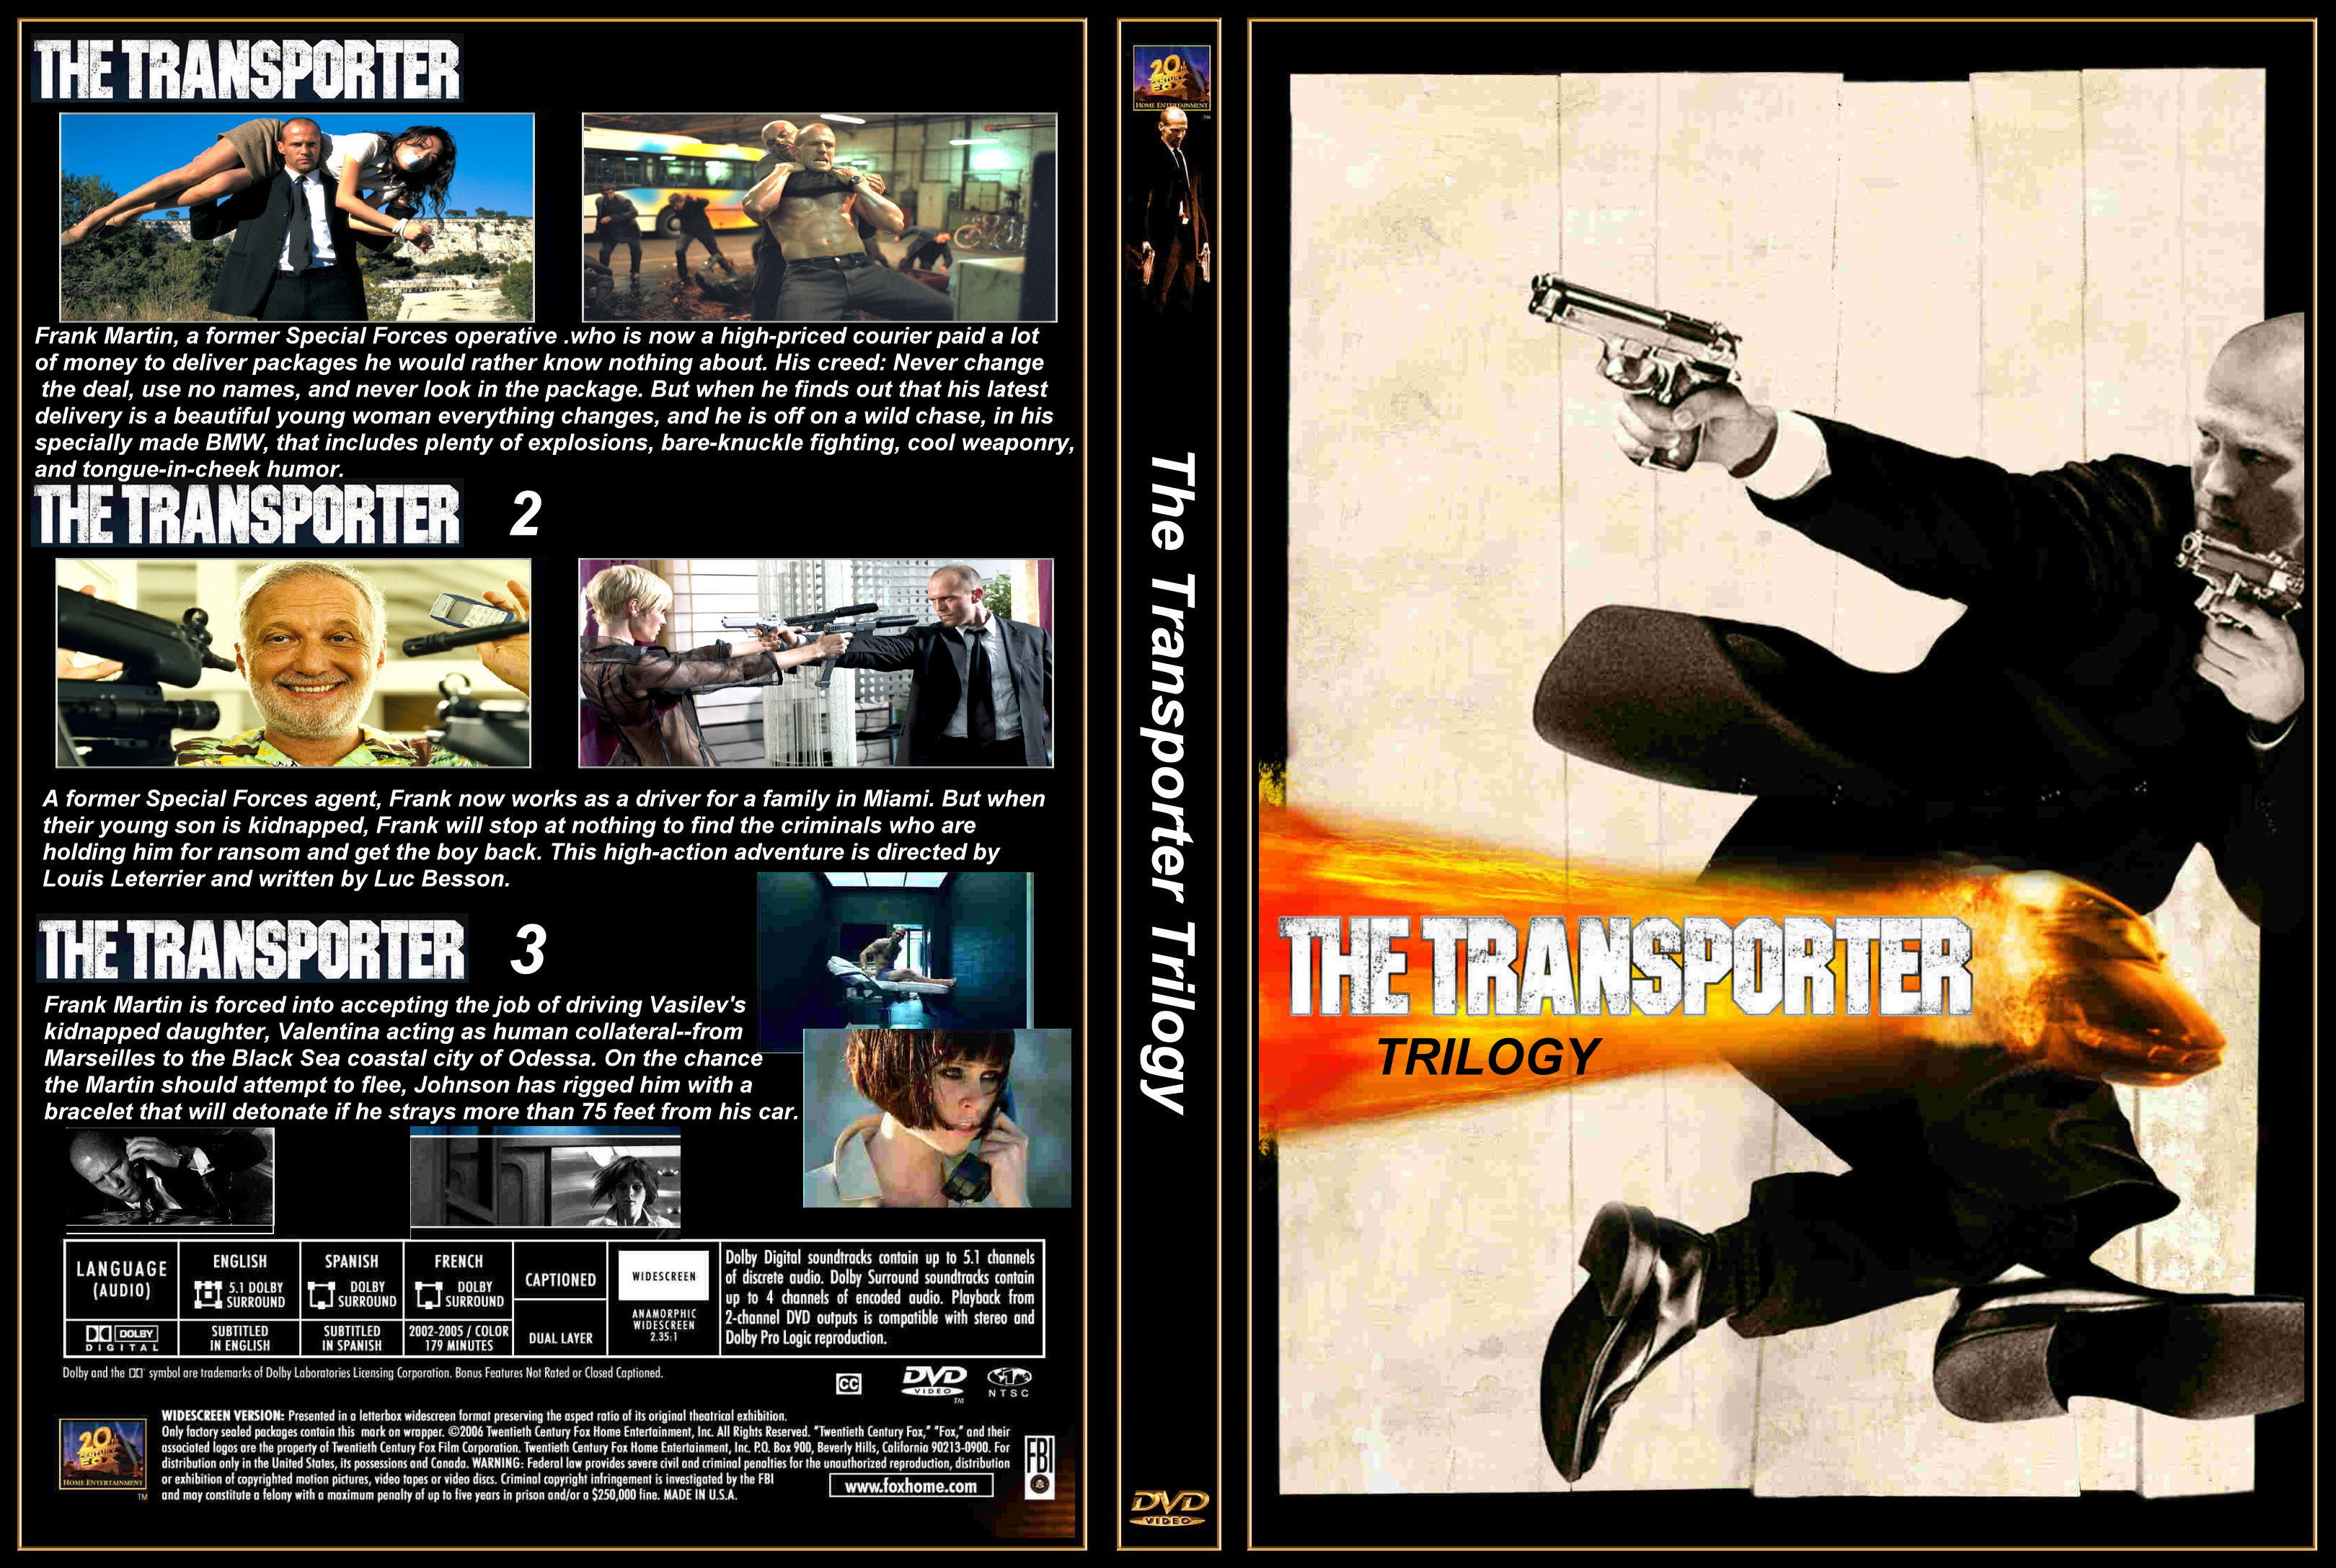 Transporter Trilogie Jaso Statham ( 2002 /05 \08 )